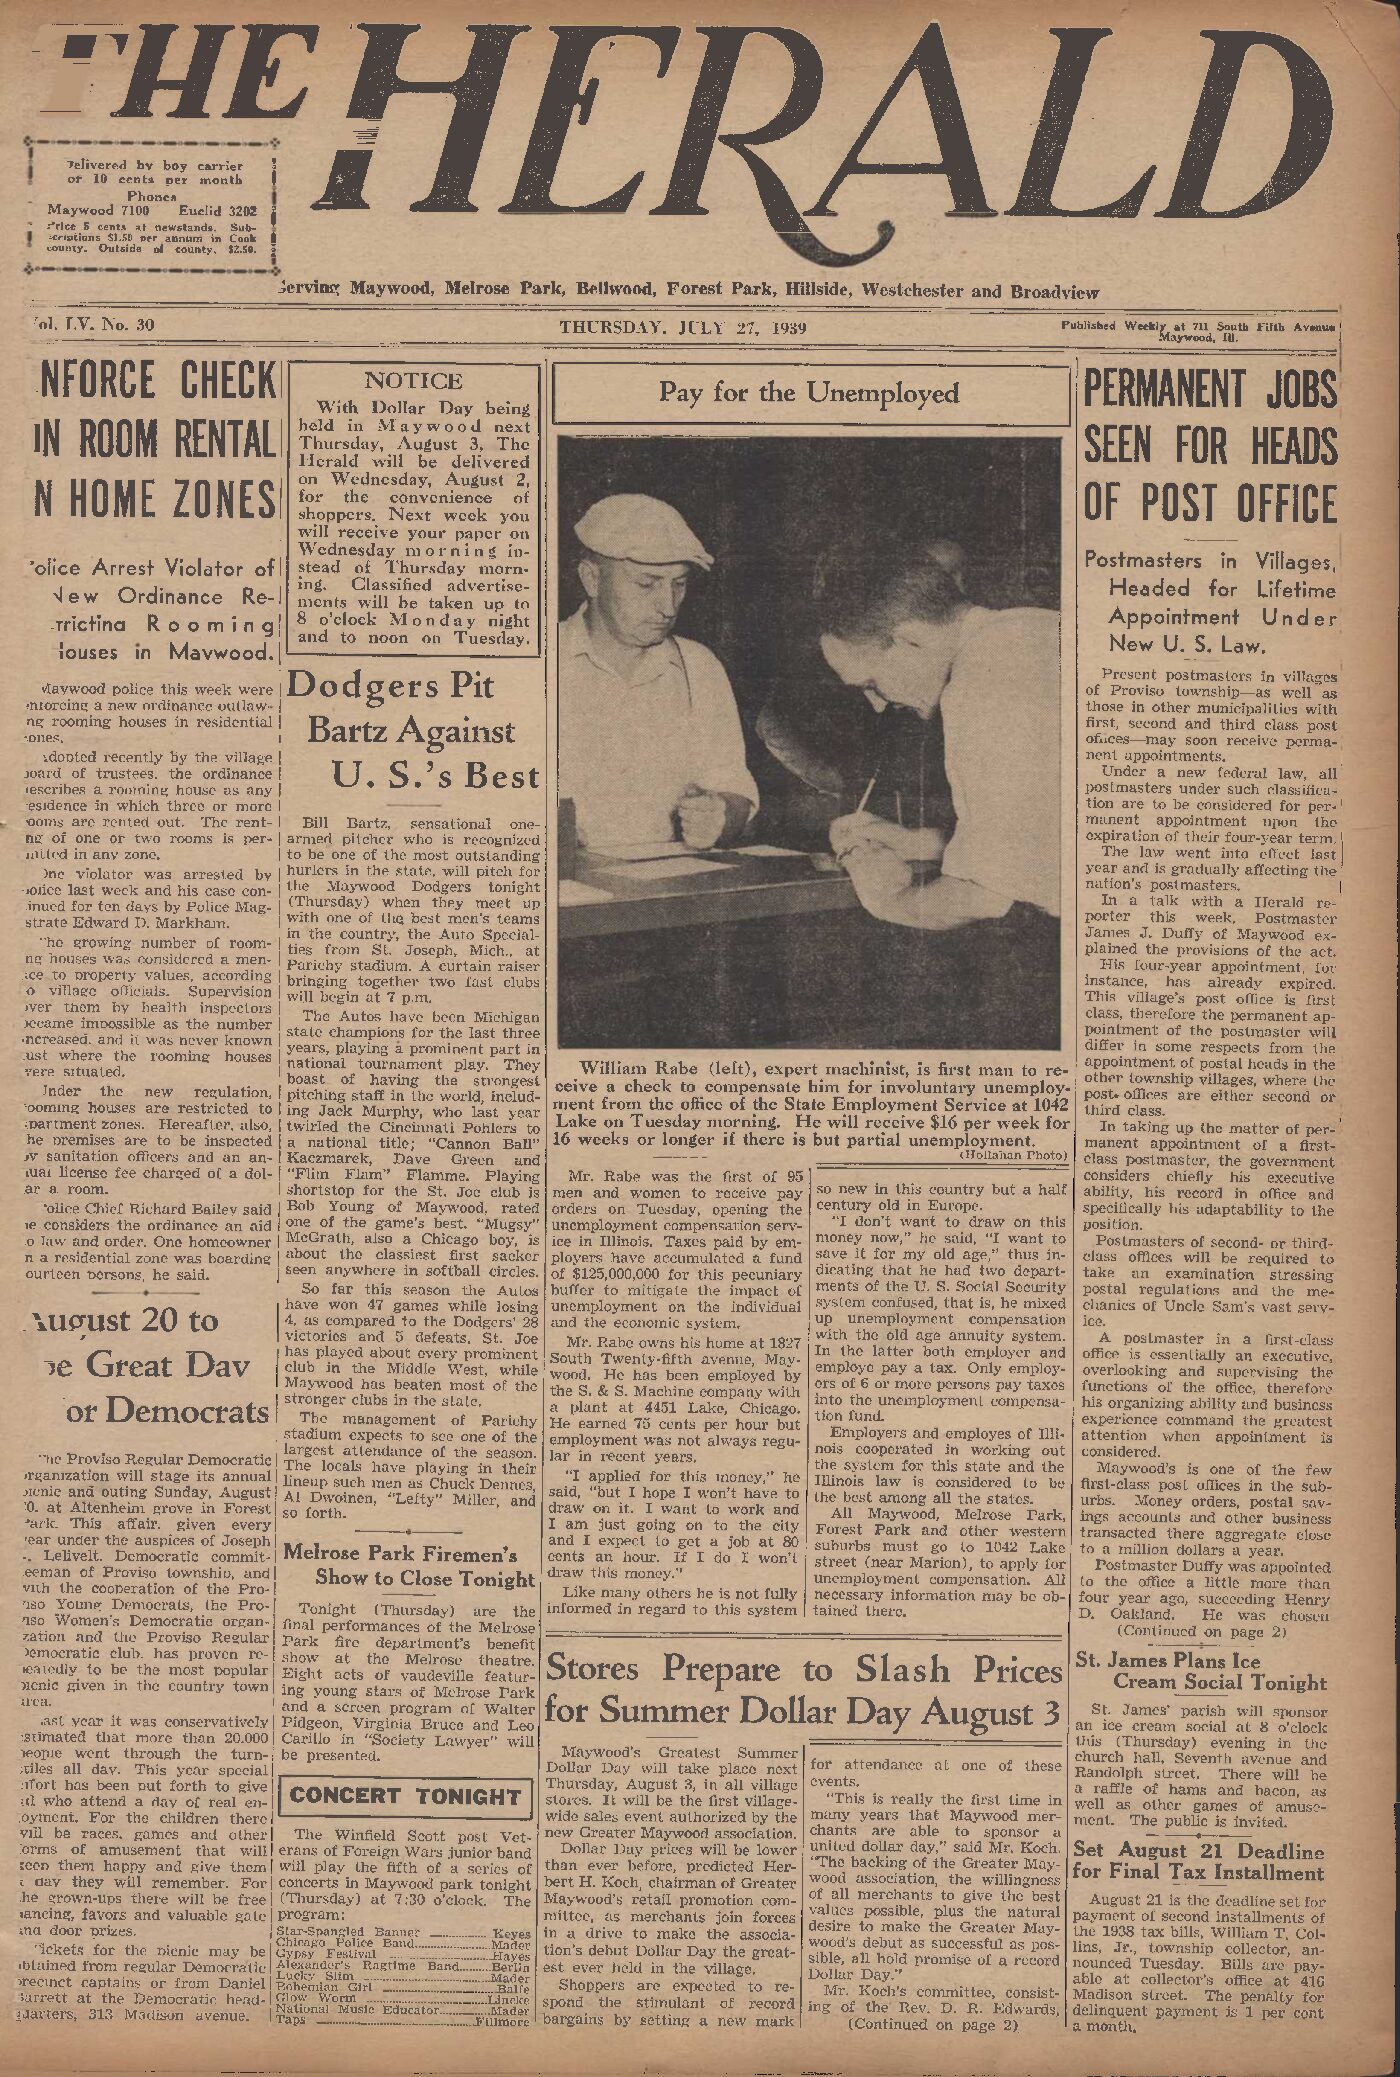 The Herald – 19390727